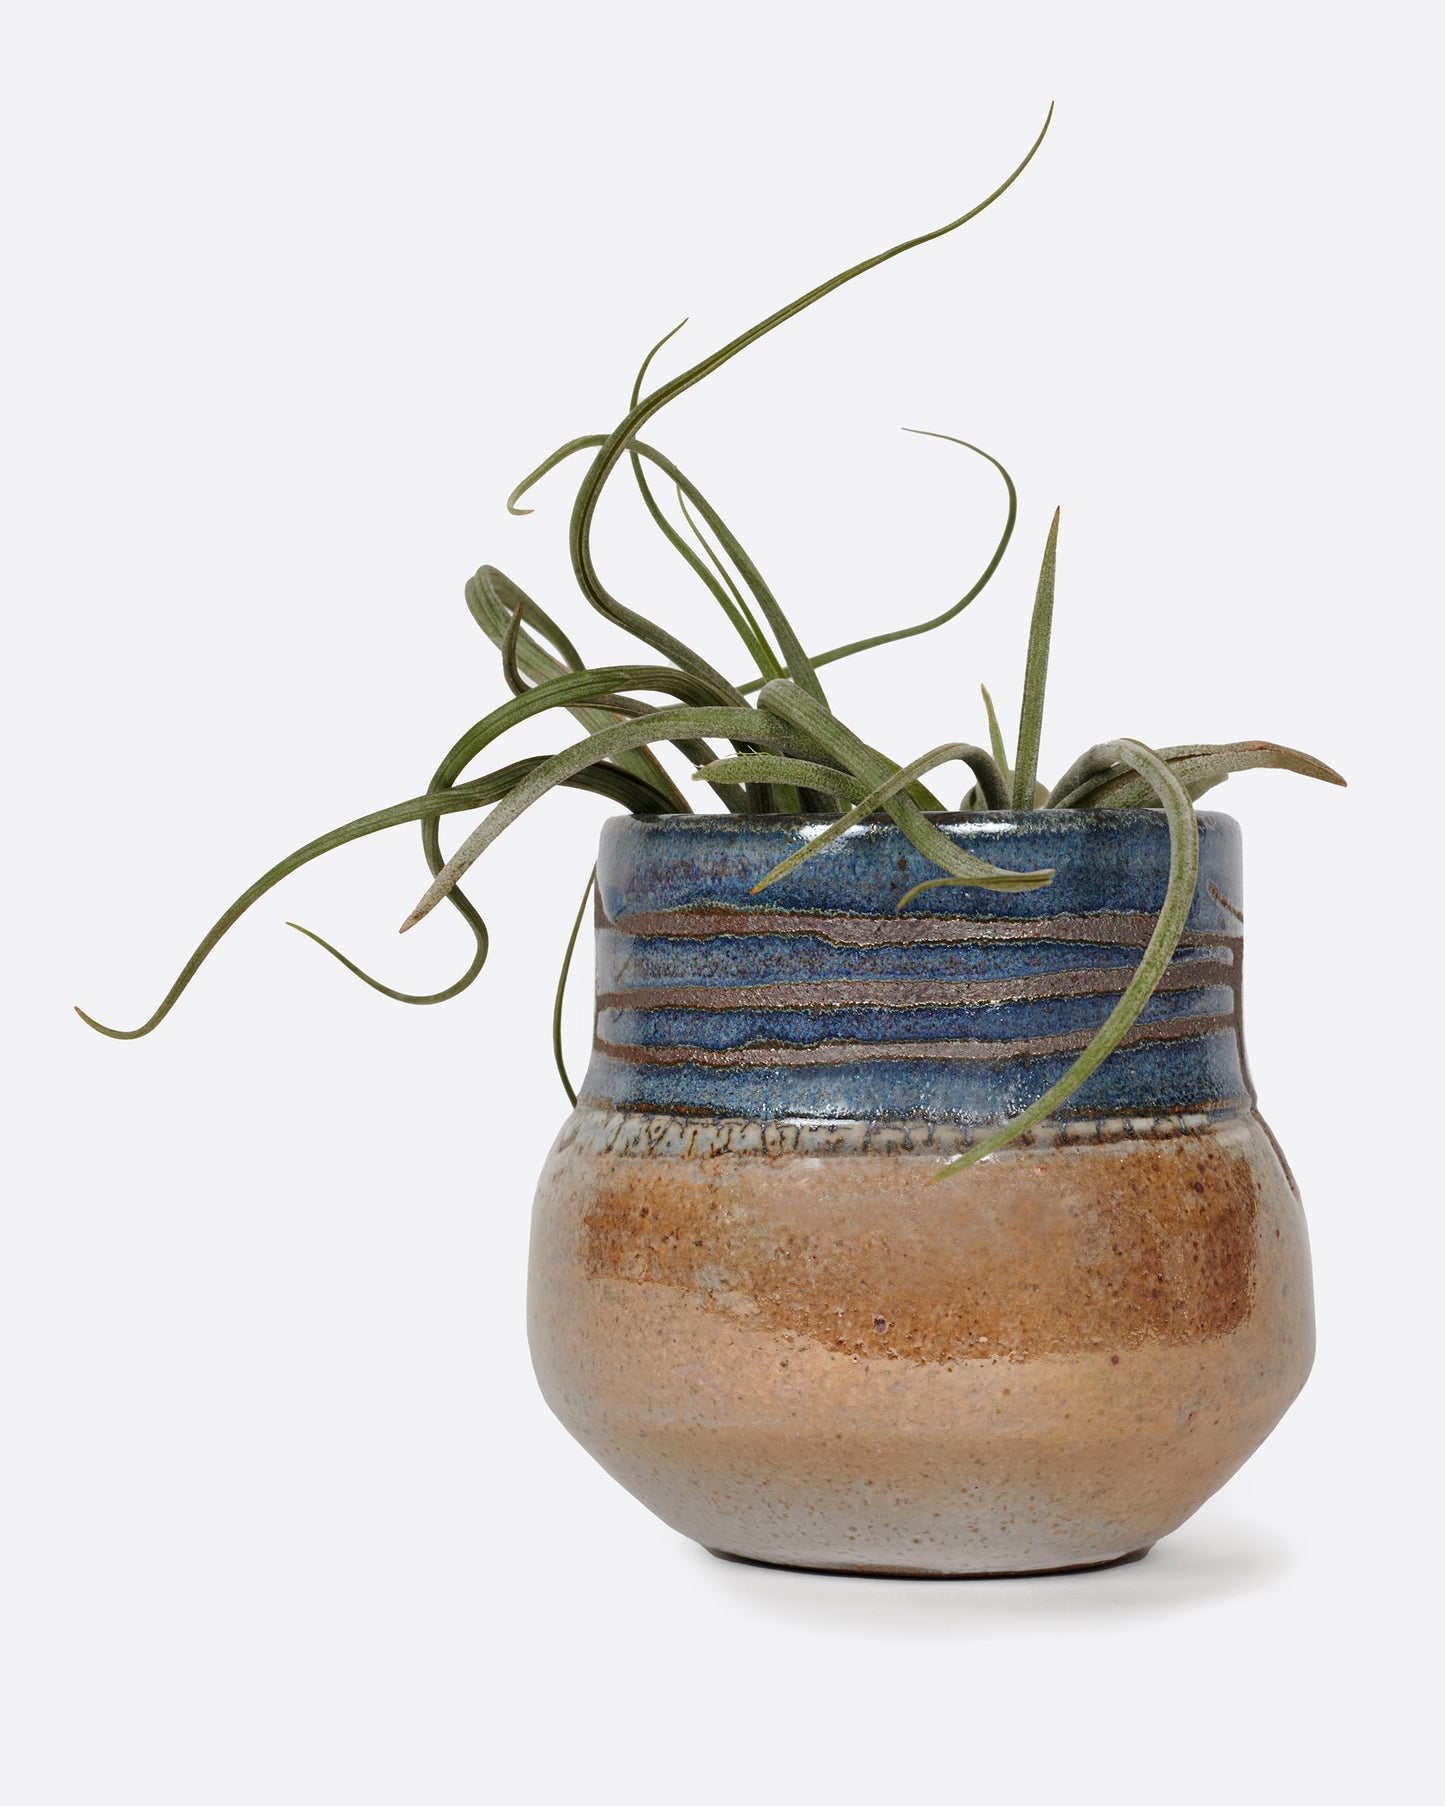 A short, round vase that's glazed half blue and half brown.